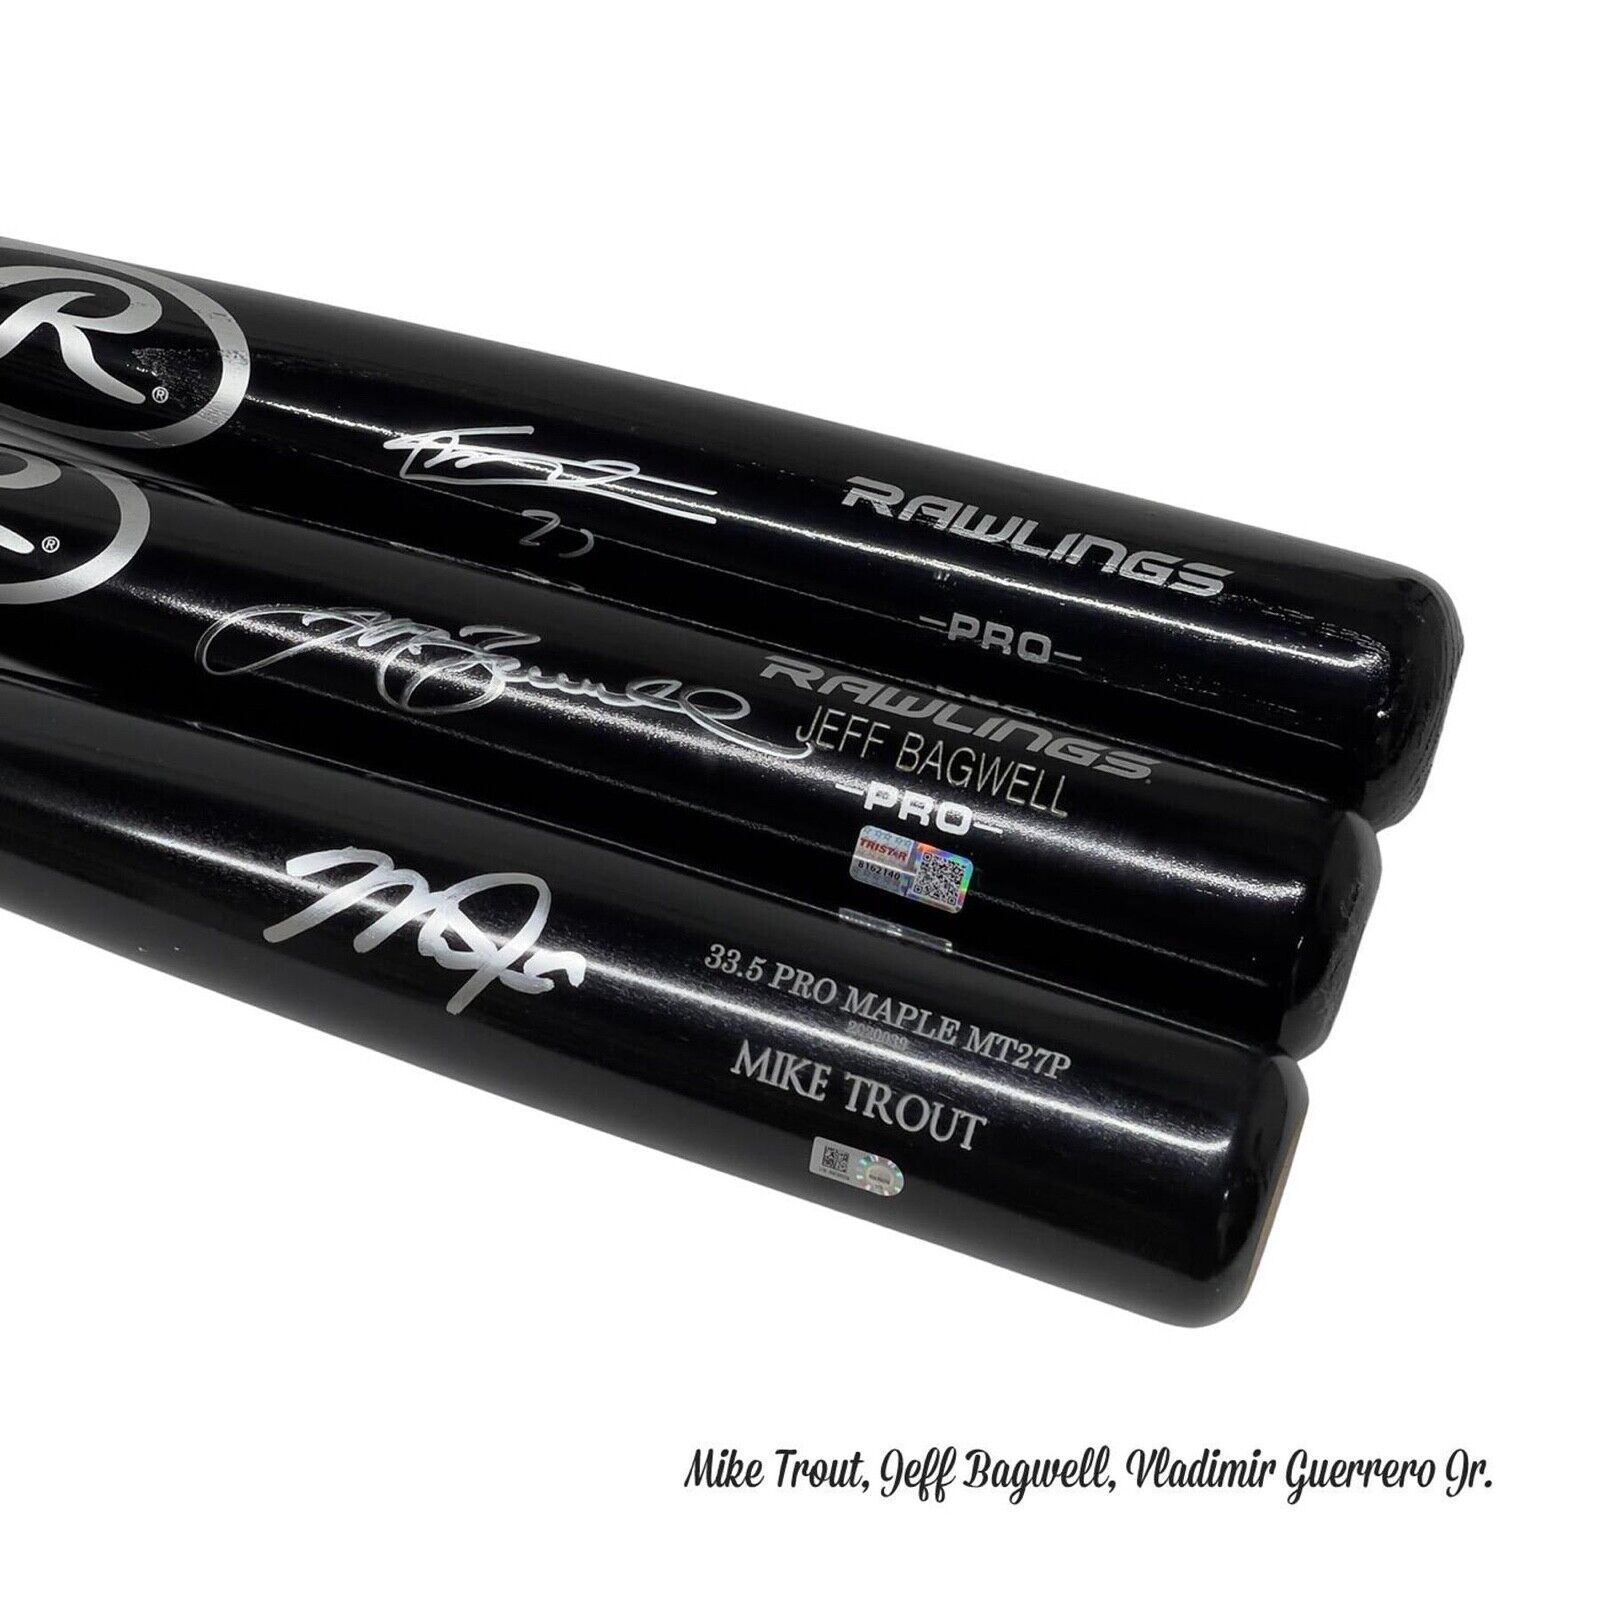 ARIZONA DBACKS HitParade Autographed Baseball Bat S15 - Live Break 1box